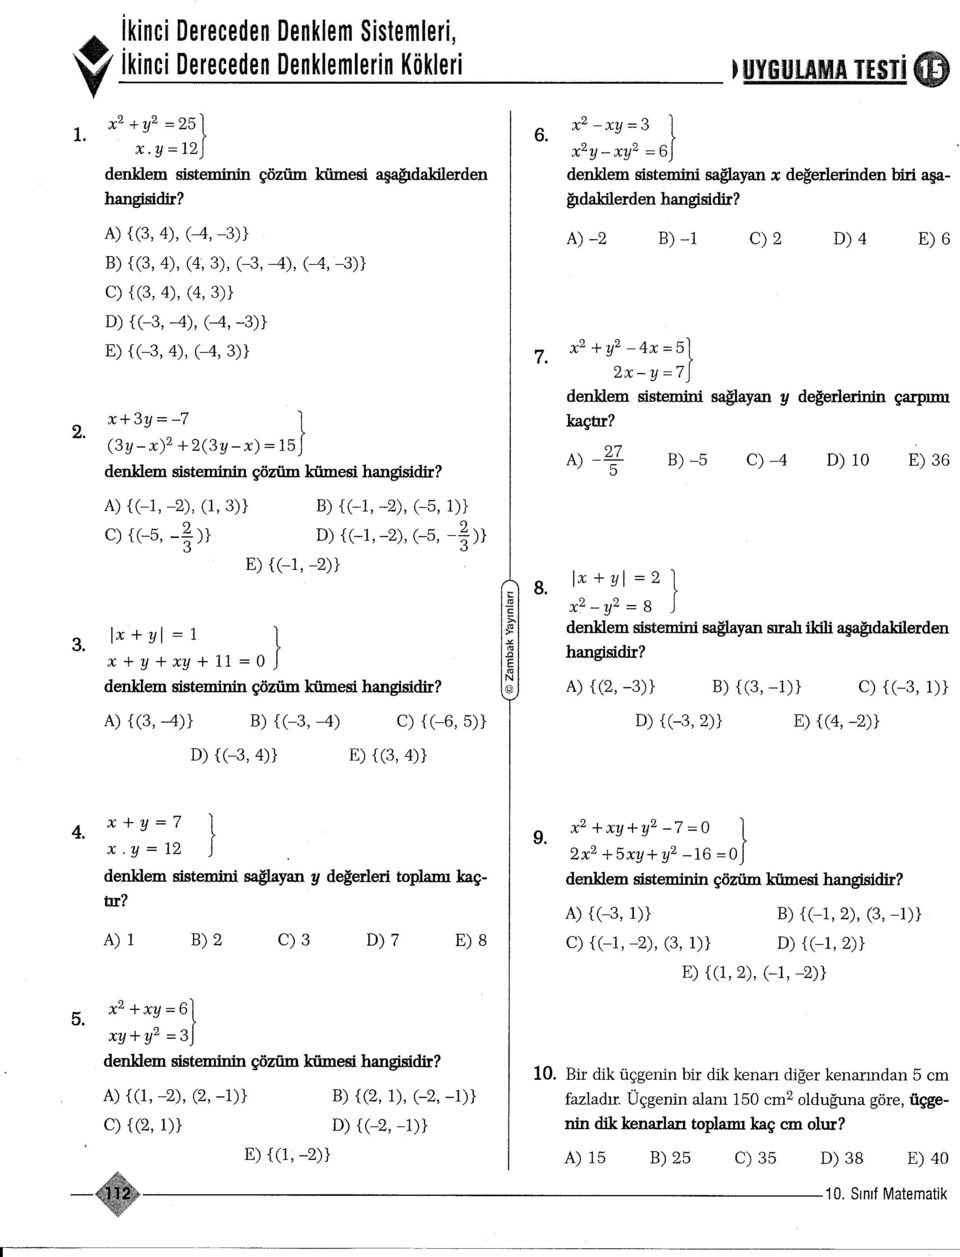 (y-x) x+y=-7 +(y-x)=i5 } denklem sisteminin çözüm kümesi A) {(-I, -), (L, )} B) {(-I, -), (-5, I)} C) {(-5, -)} D) {(-I, -), (-5, -)} E) {(-I, -)} 6. 7.